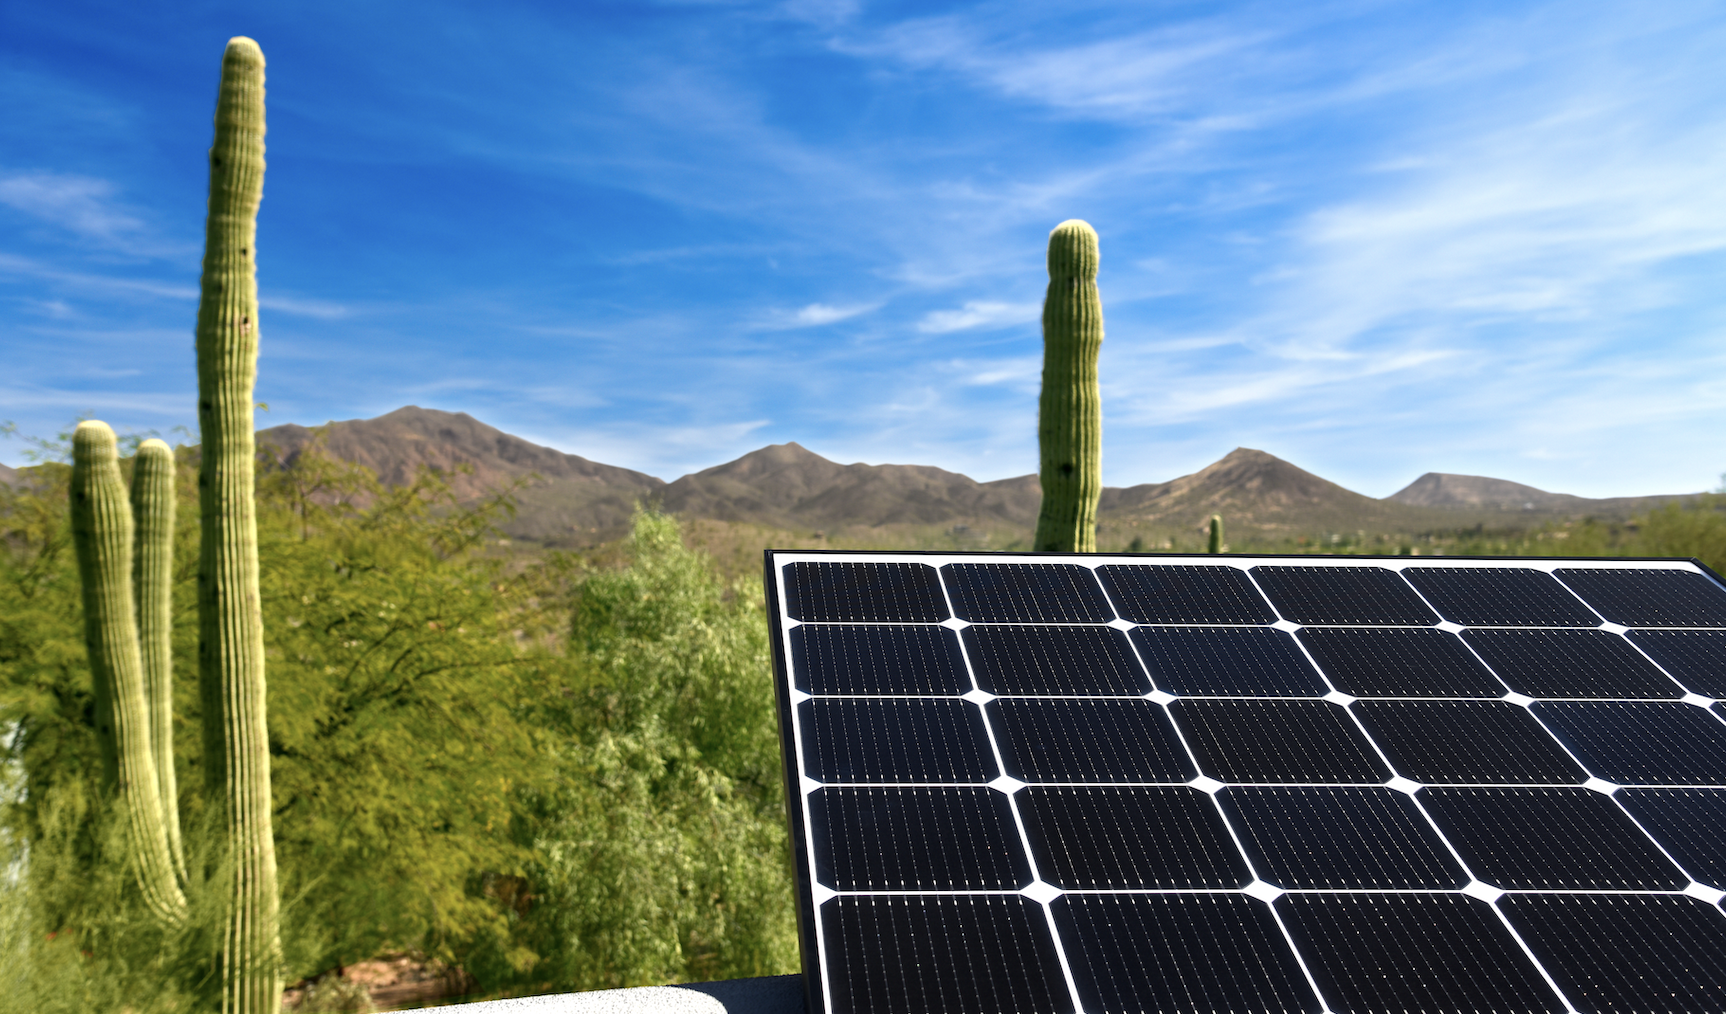 cactus with solar panel